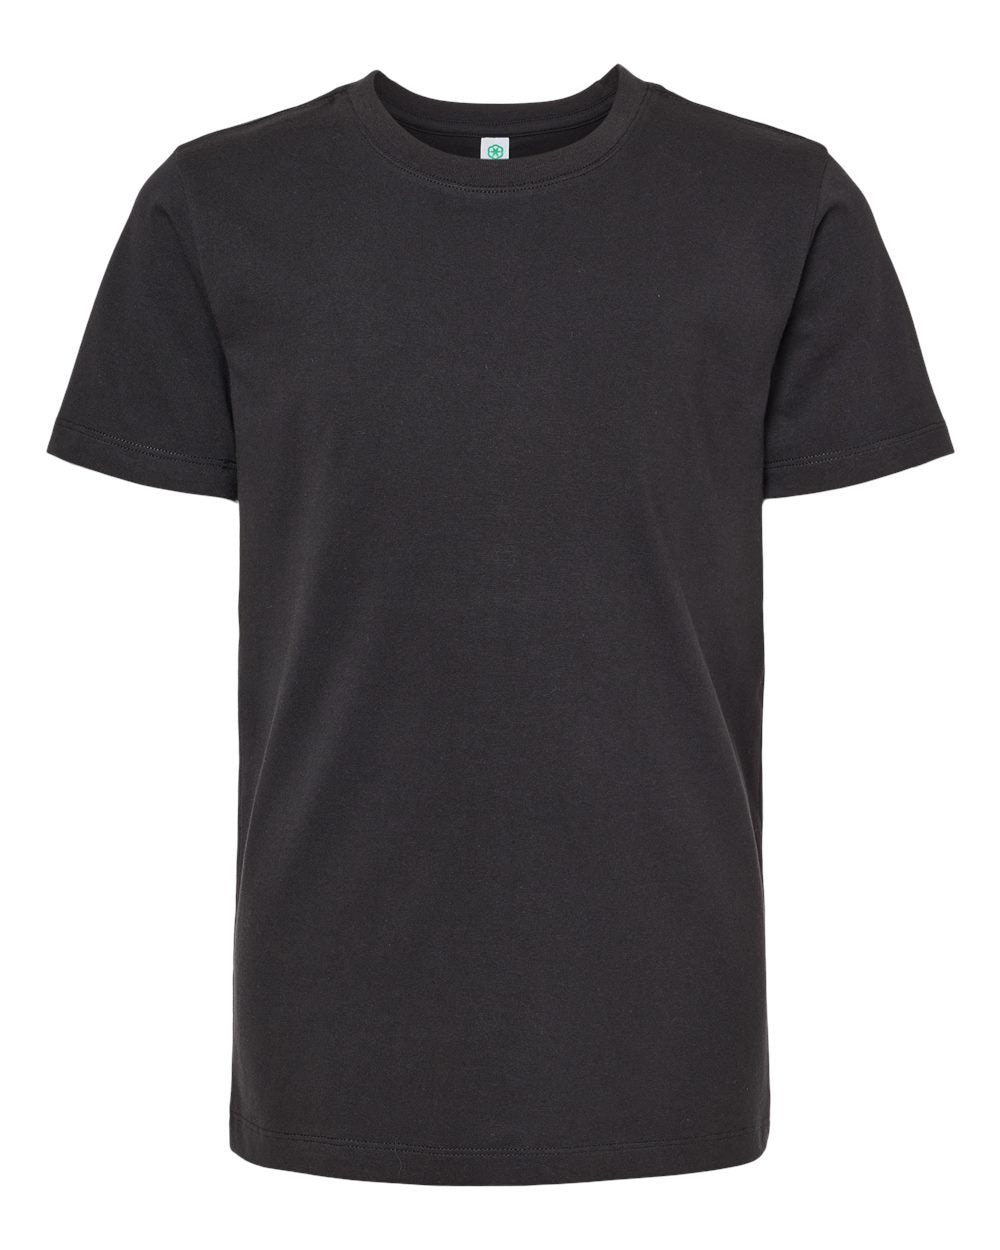 Softshirts® Youth Organic Cotton T-shirt in black